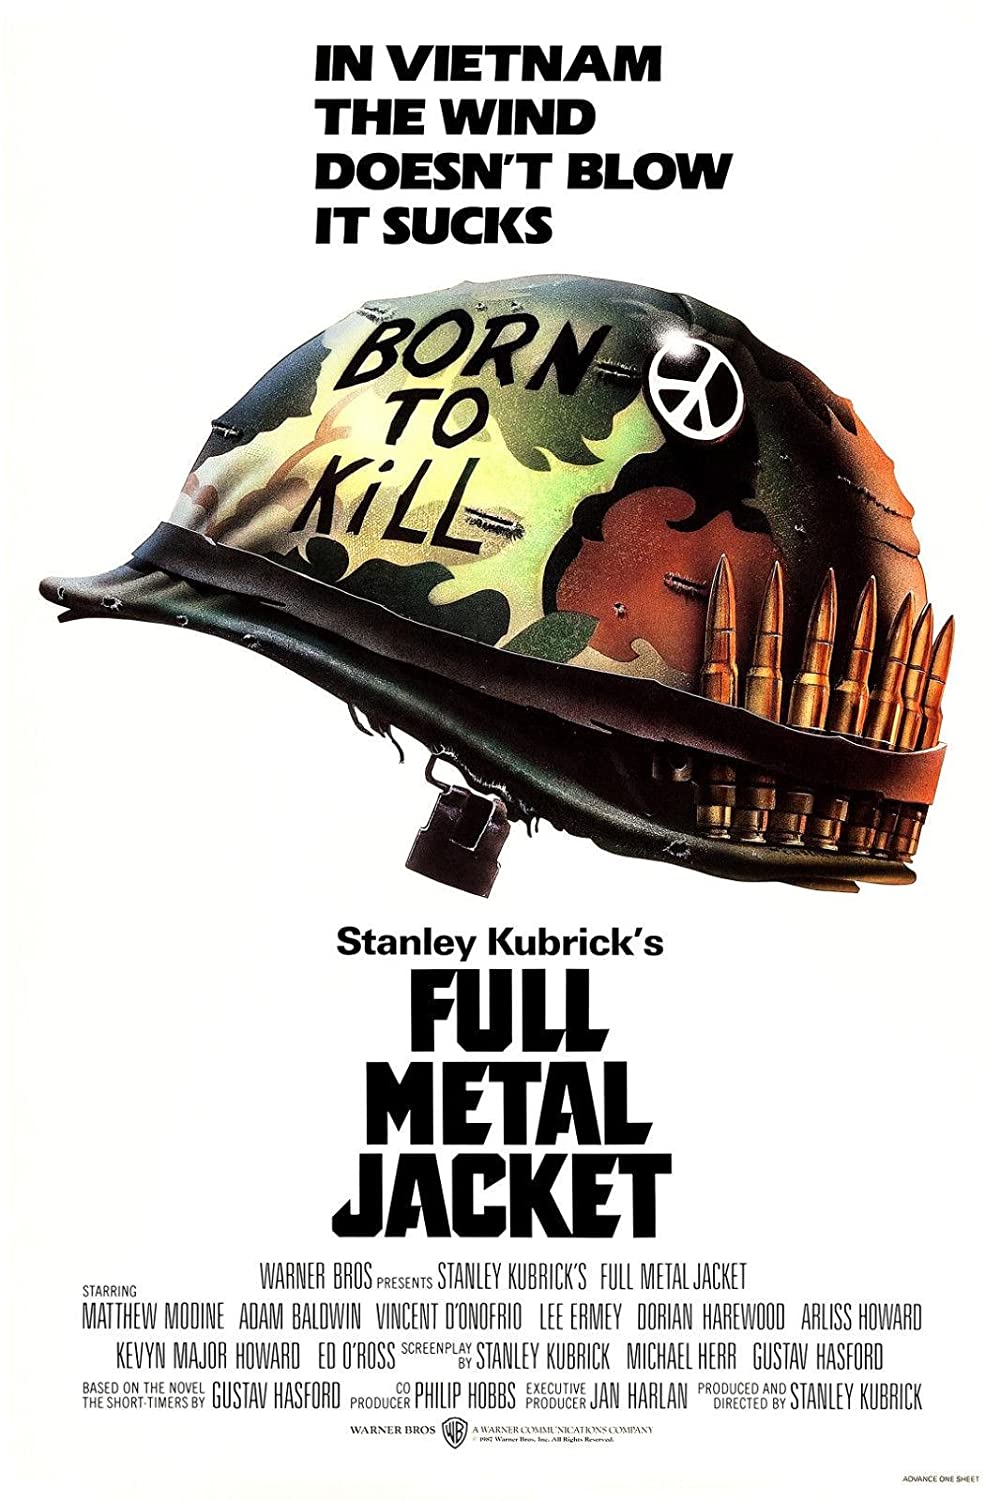 Film poster for Stanley Kubrick